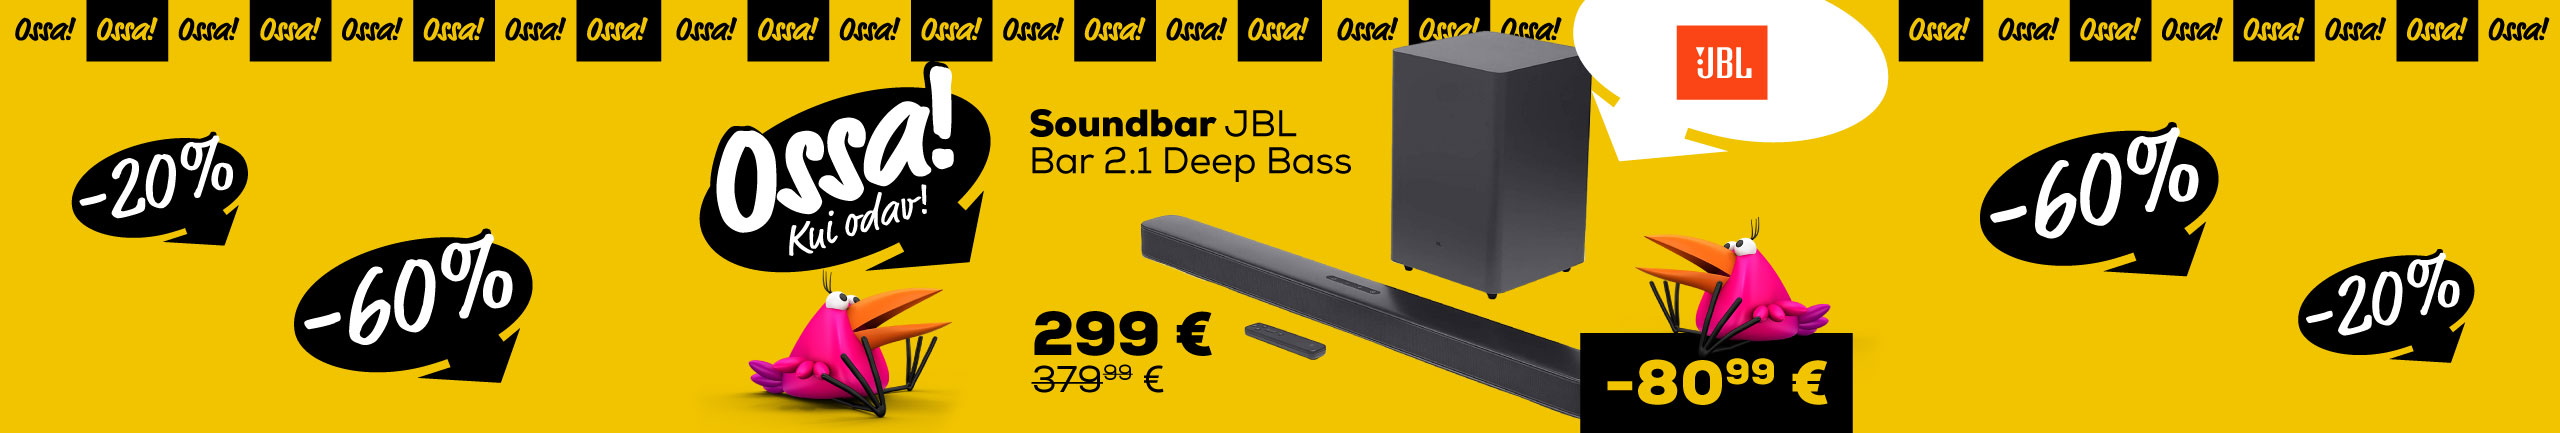 NPL  Ossa pikenes! Lisasime uusi tooteid! Soundbar JBL Bar 2.1 Deep Bass 